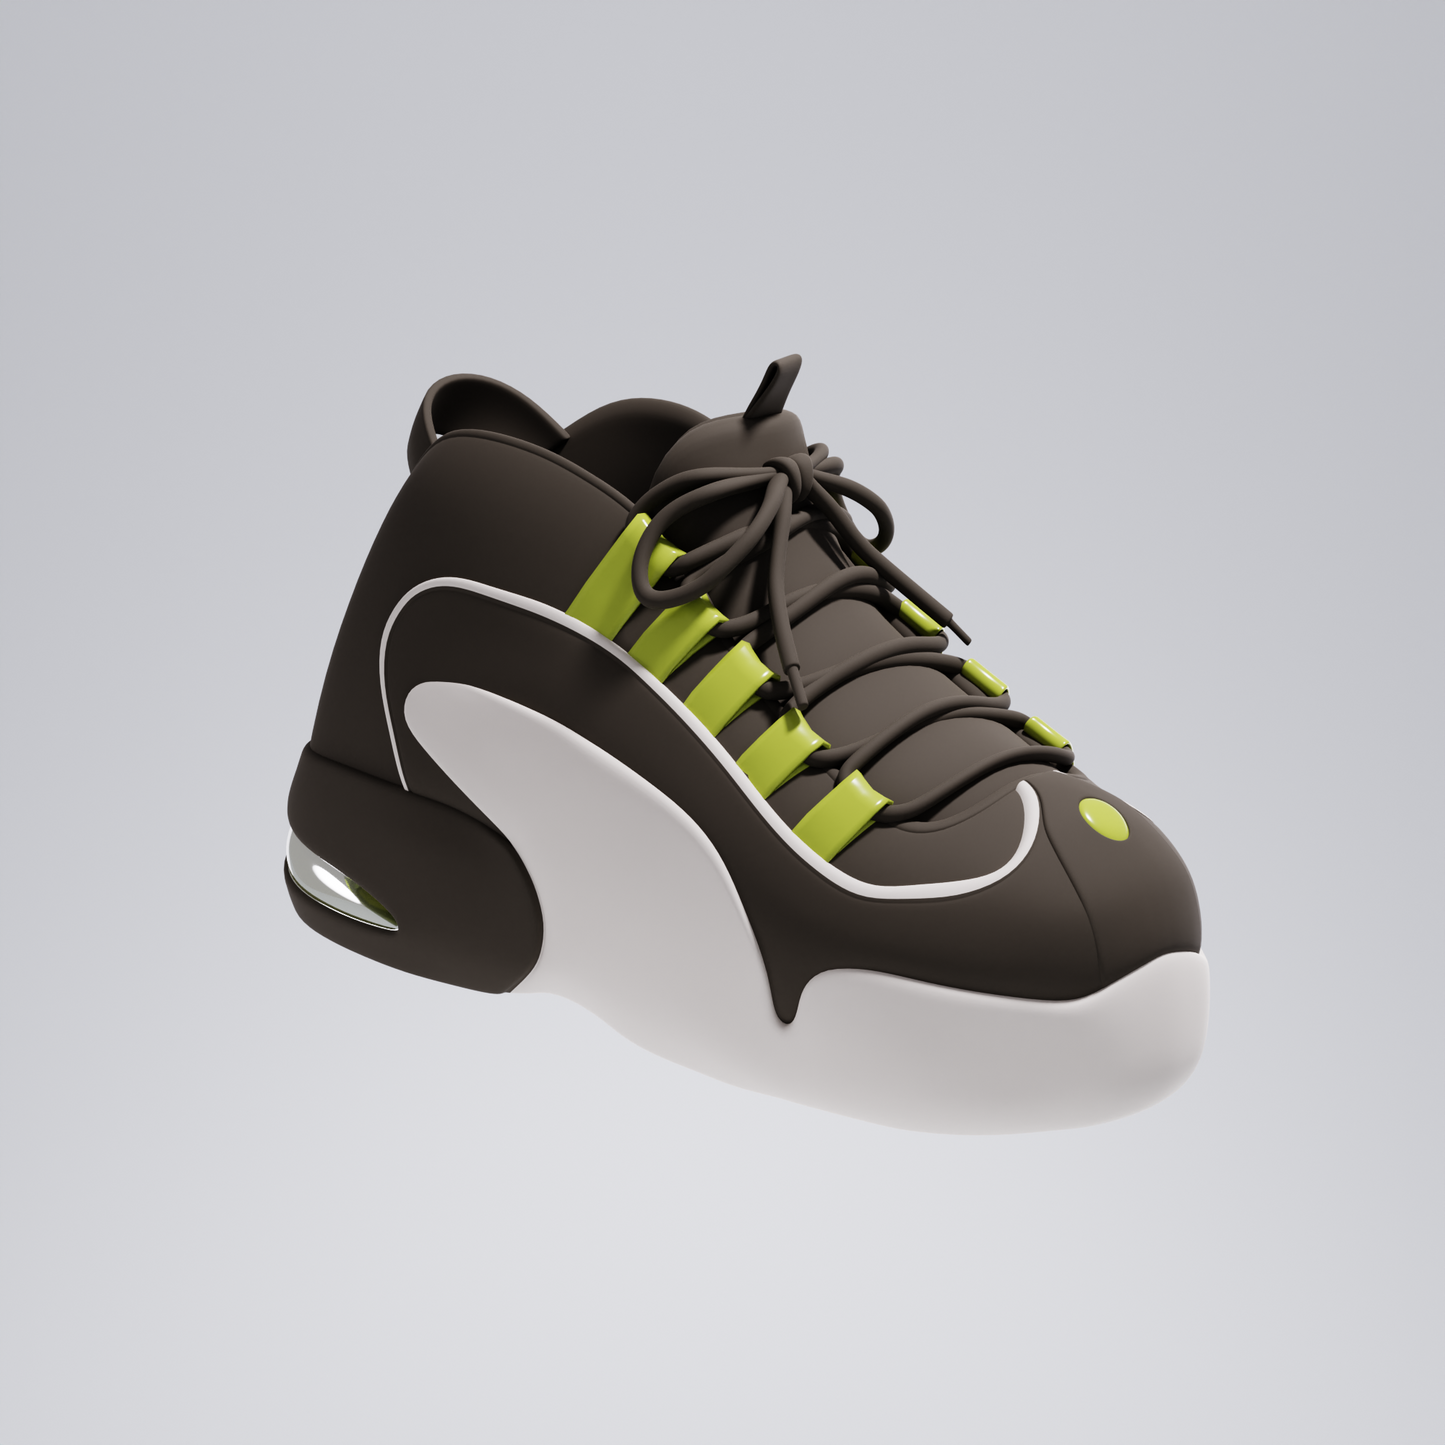 XX "Max" Sneakers (Digital Download)